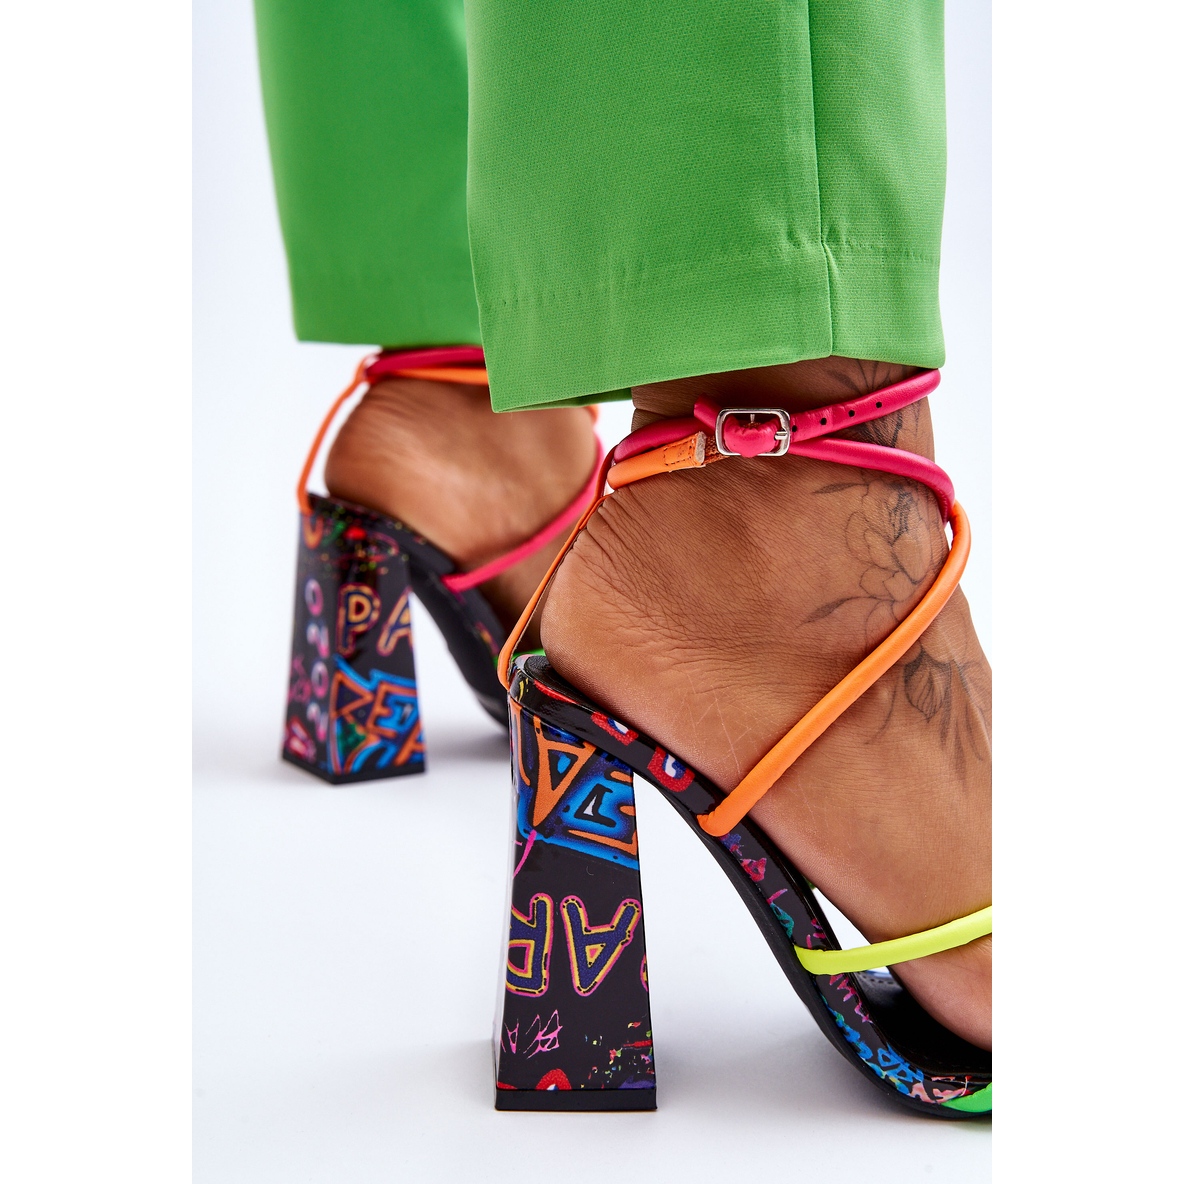 Plus Size 40 High Heels Strap| Alibaba.com